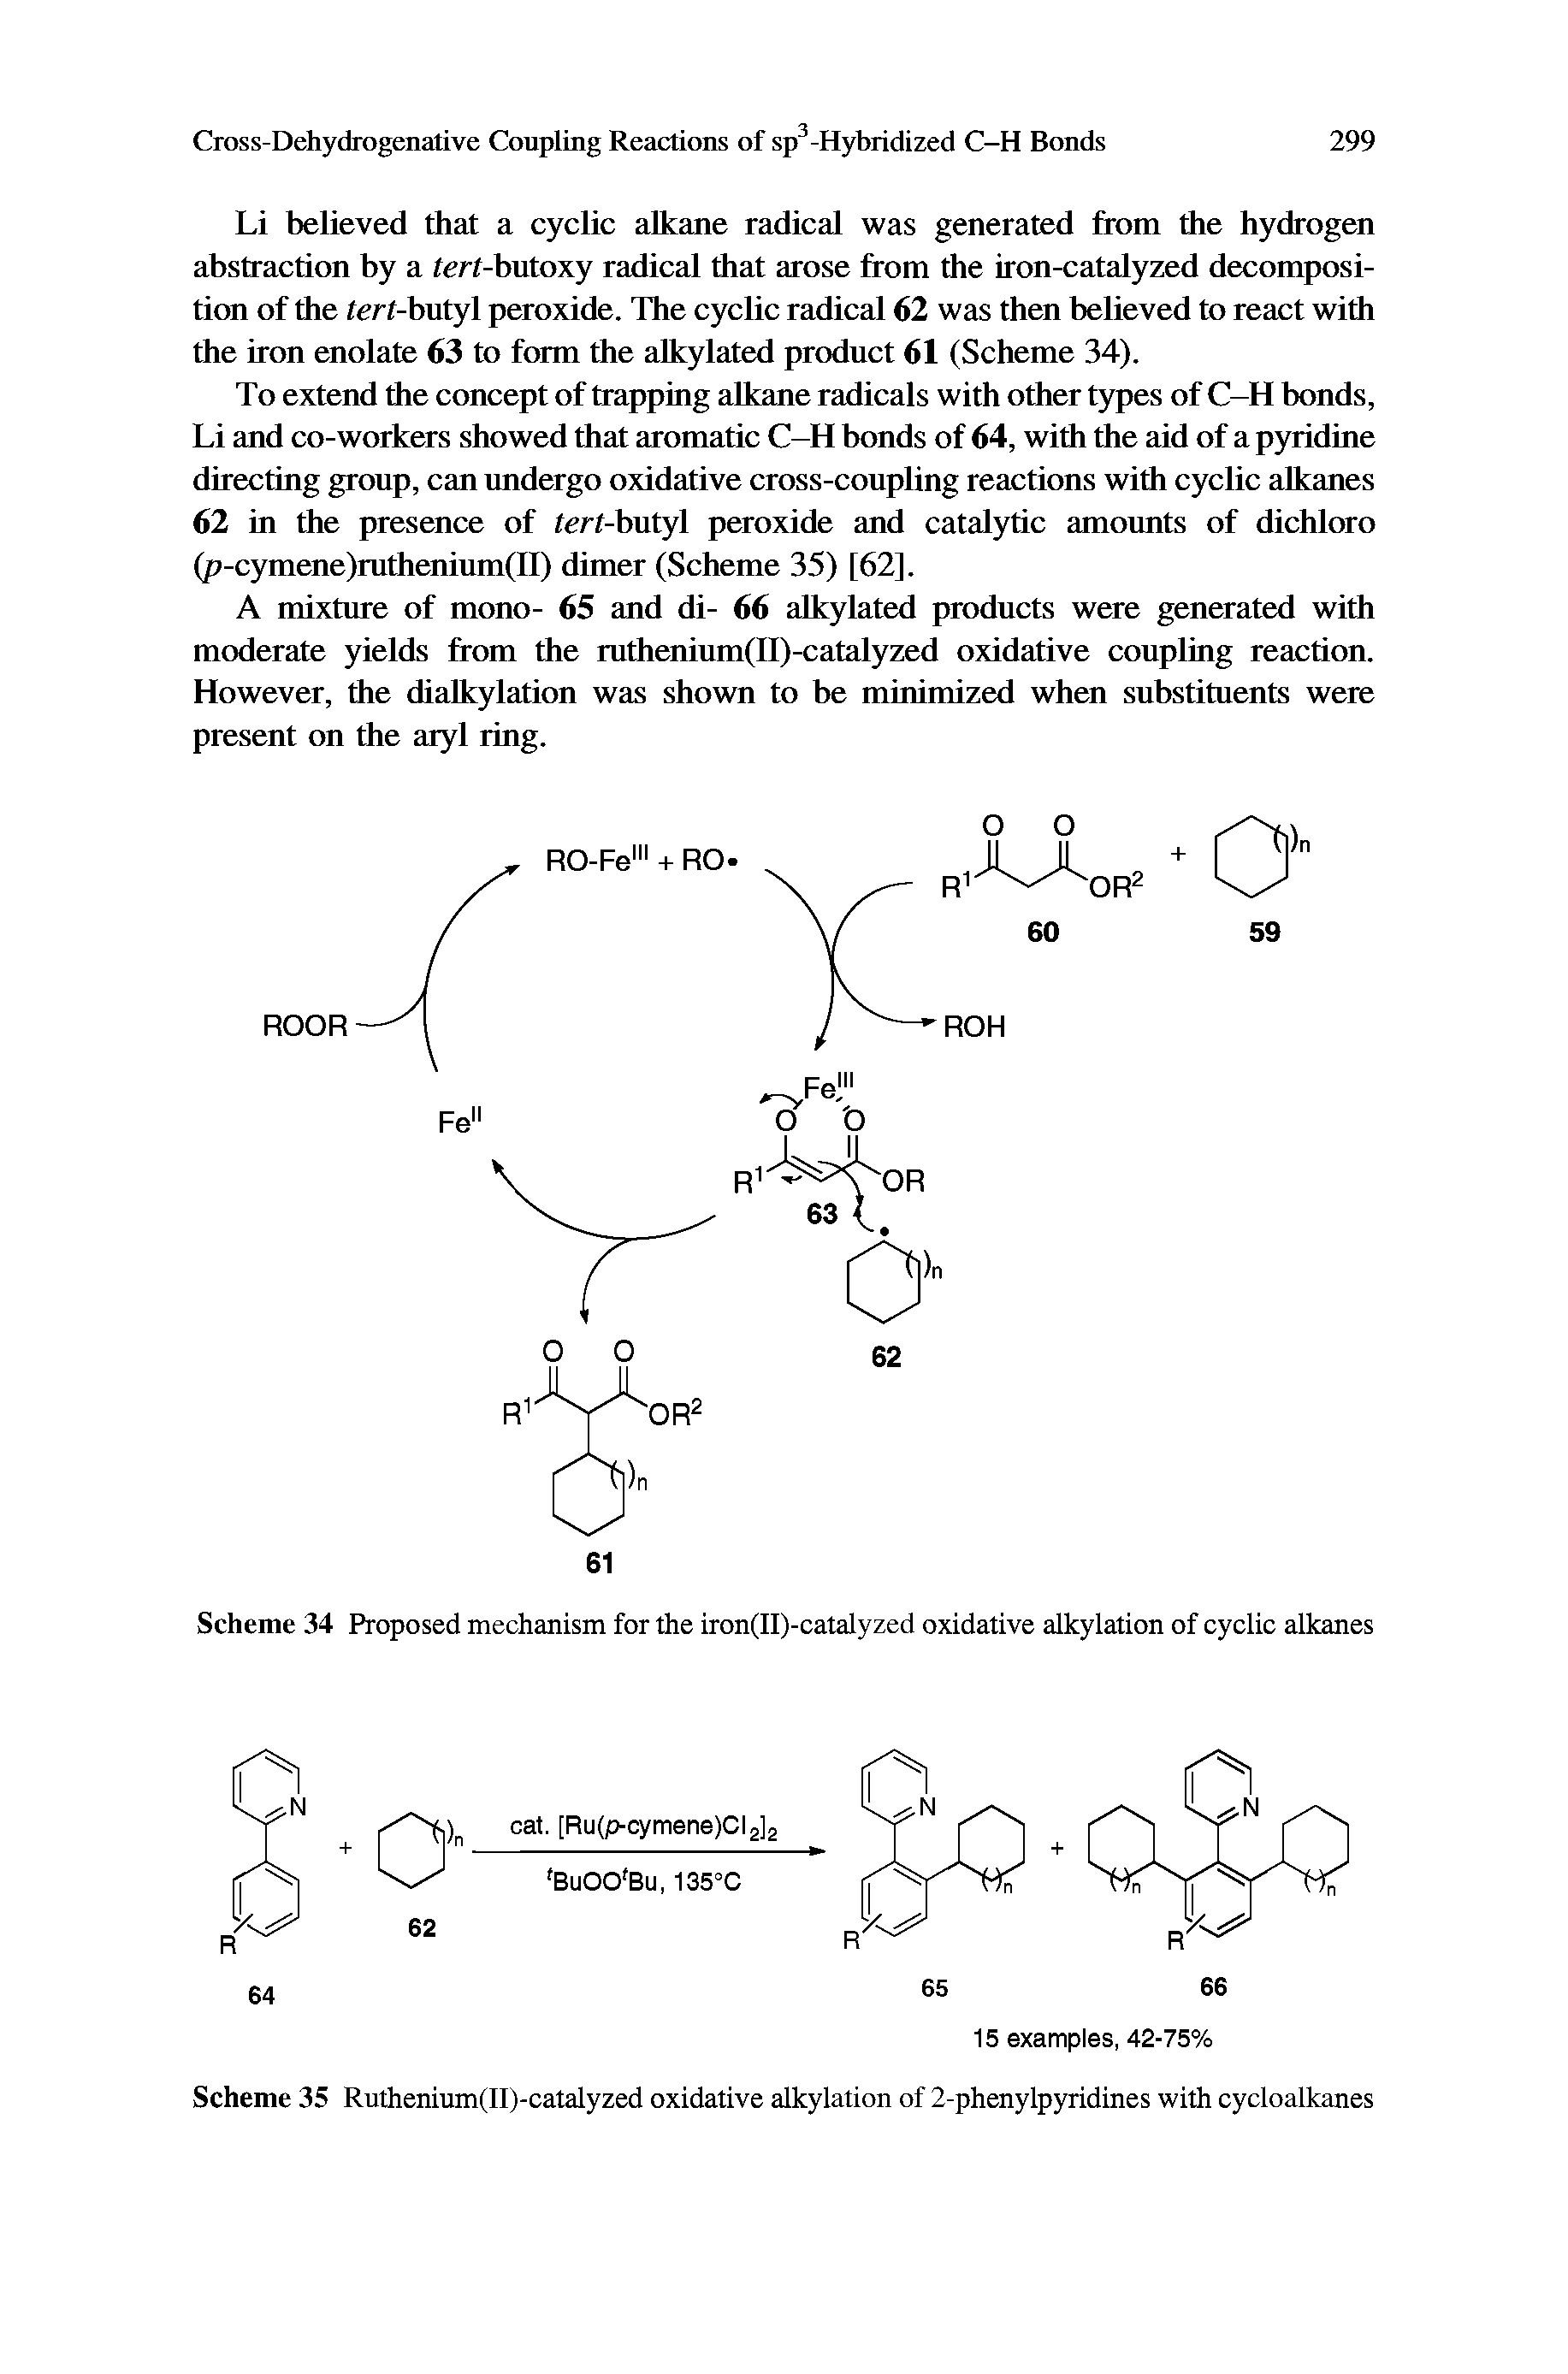 Scheme 34 Proposed mechanism for the iron(II)-catalyzed oxidative alkylation of cyclic alkanes...